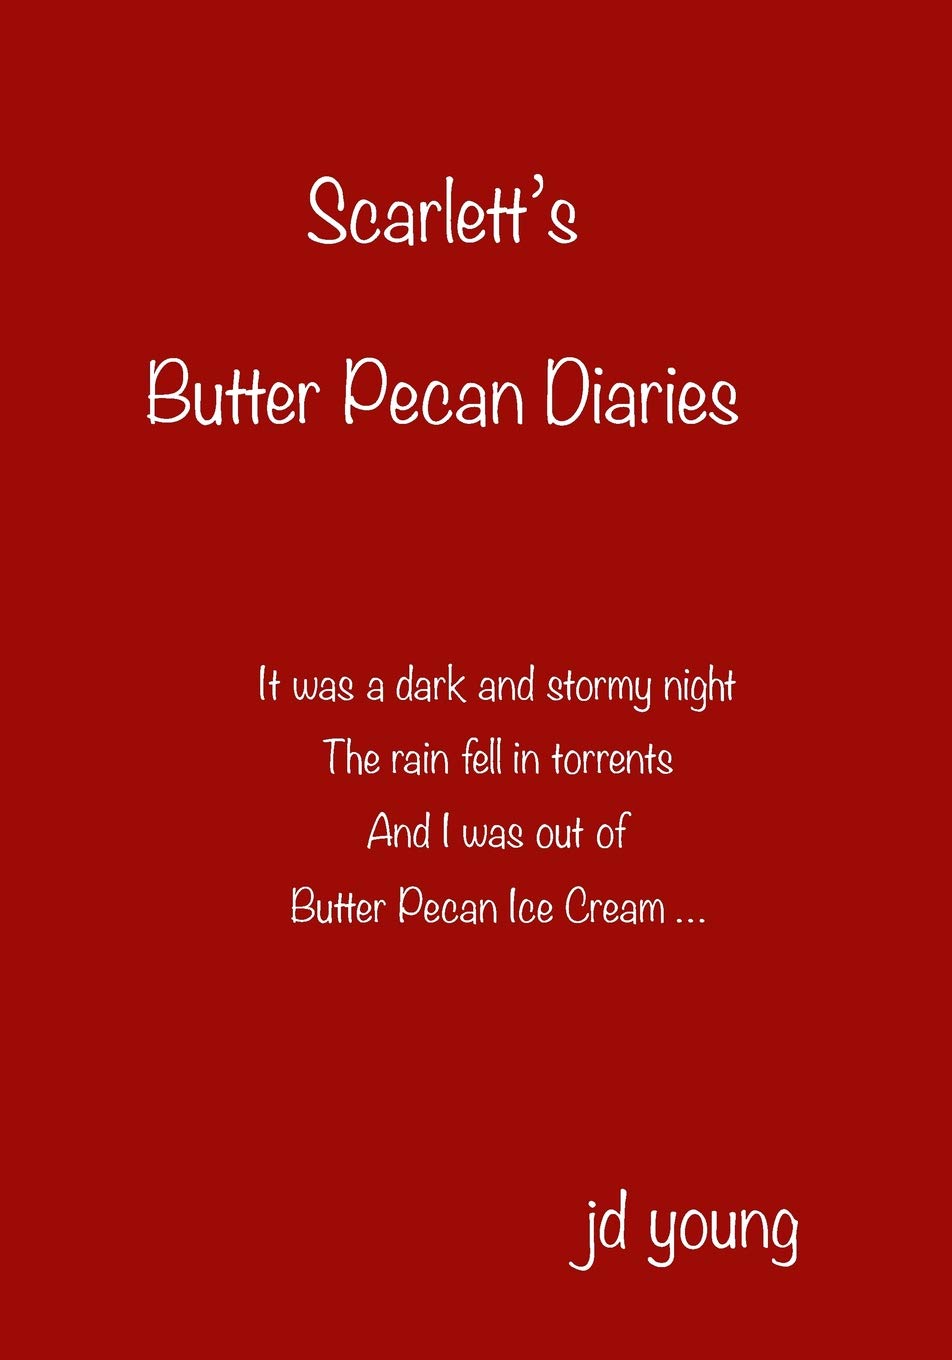 Scarlett’s Butter Pecan Diary